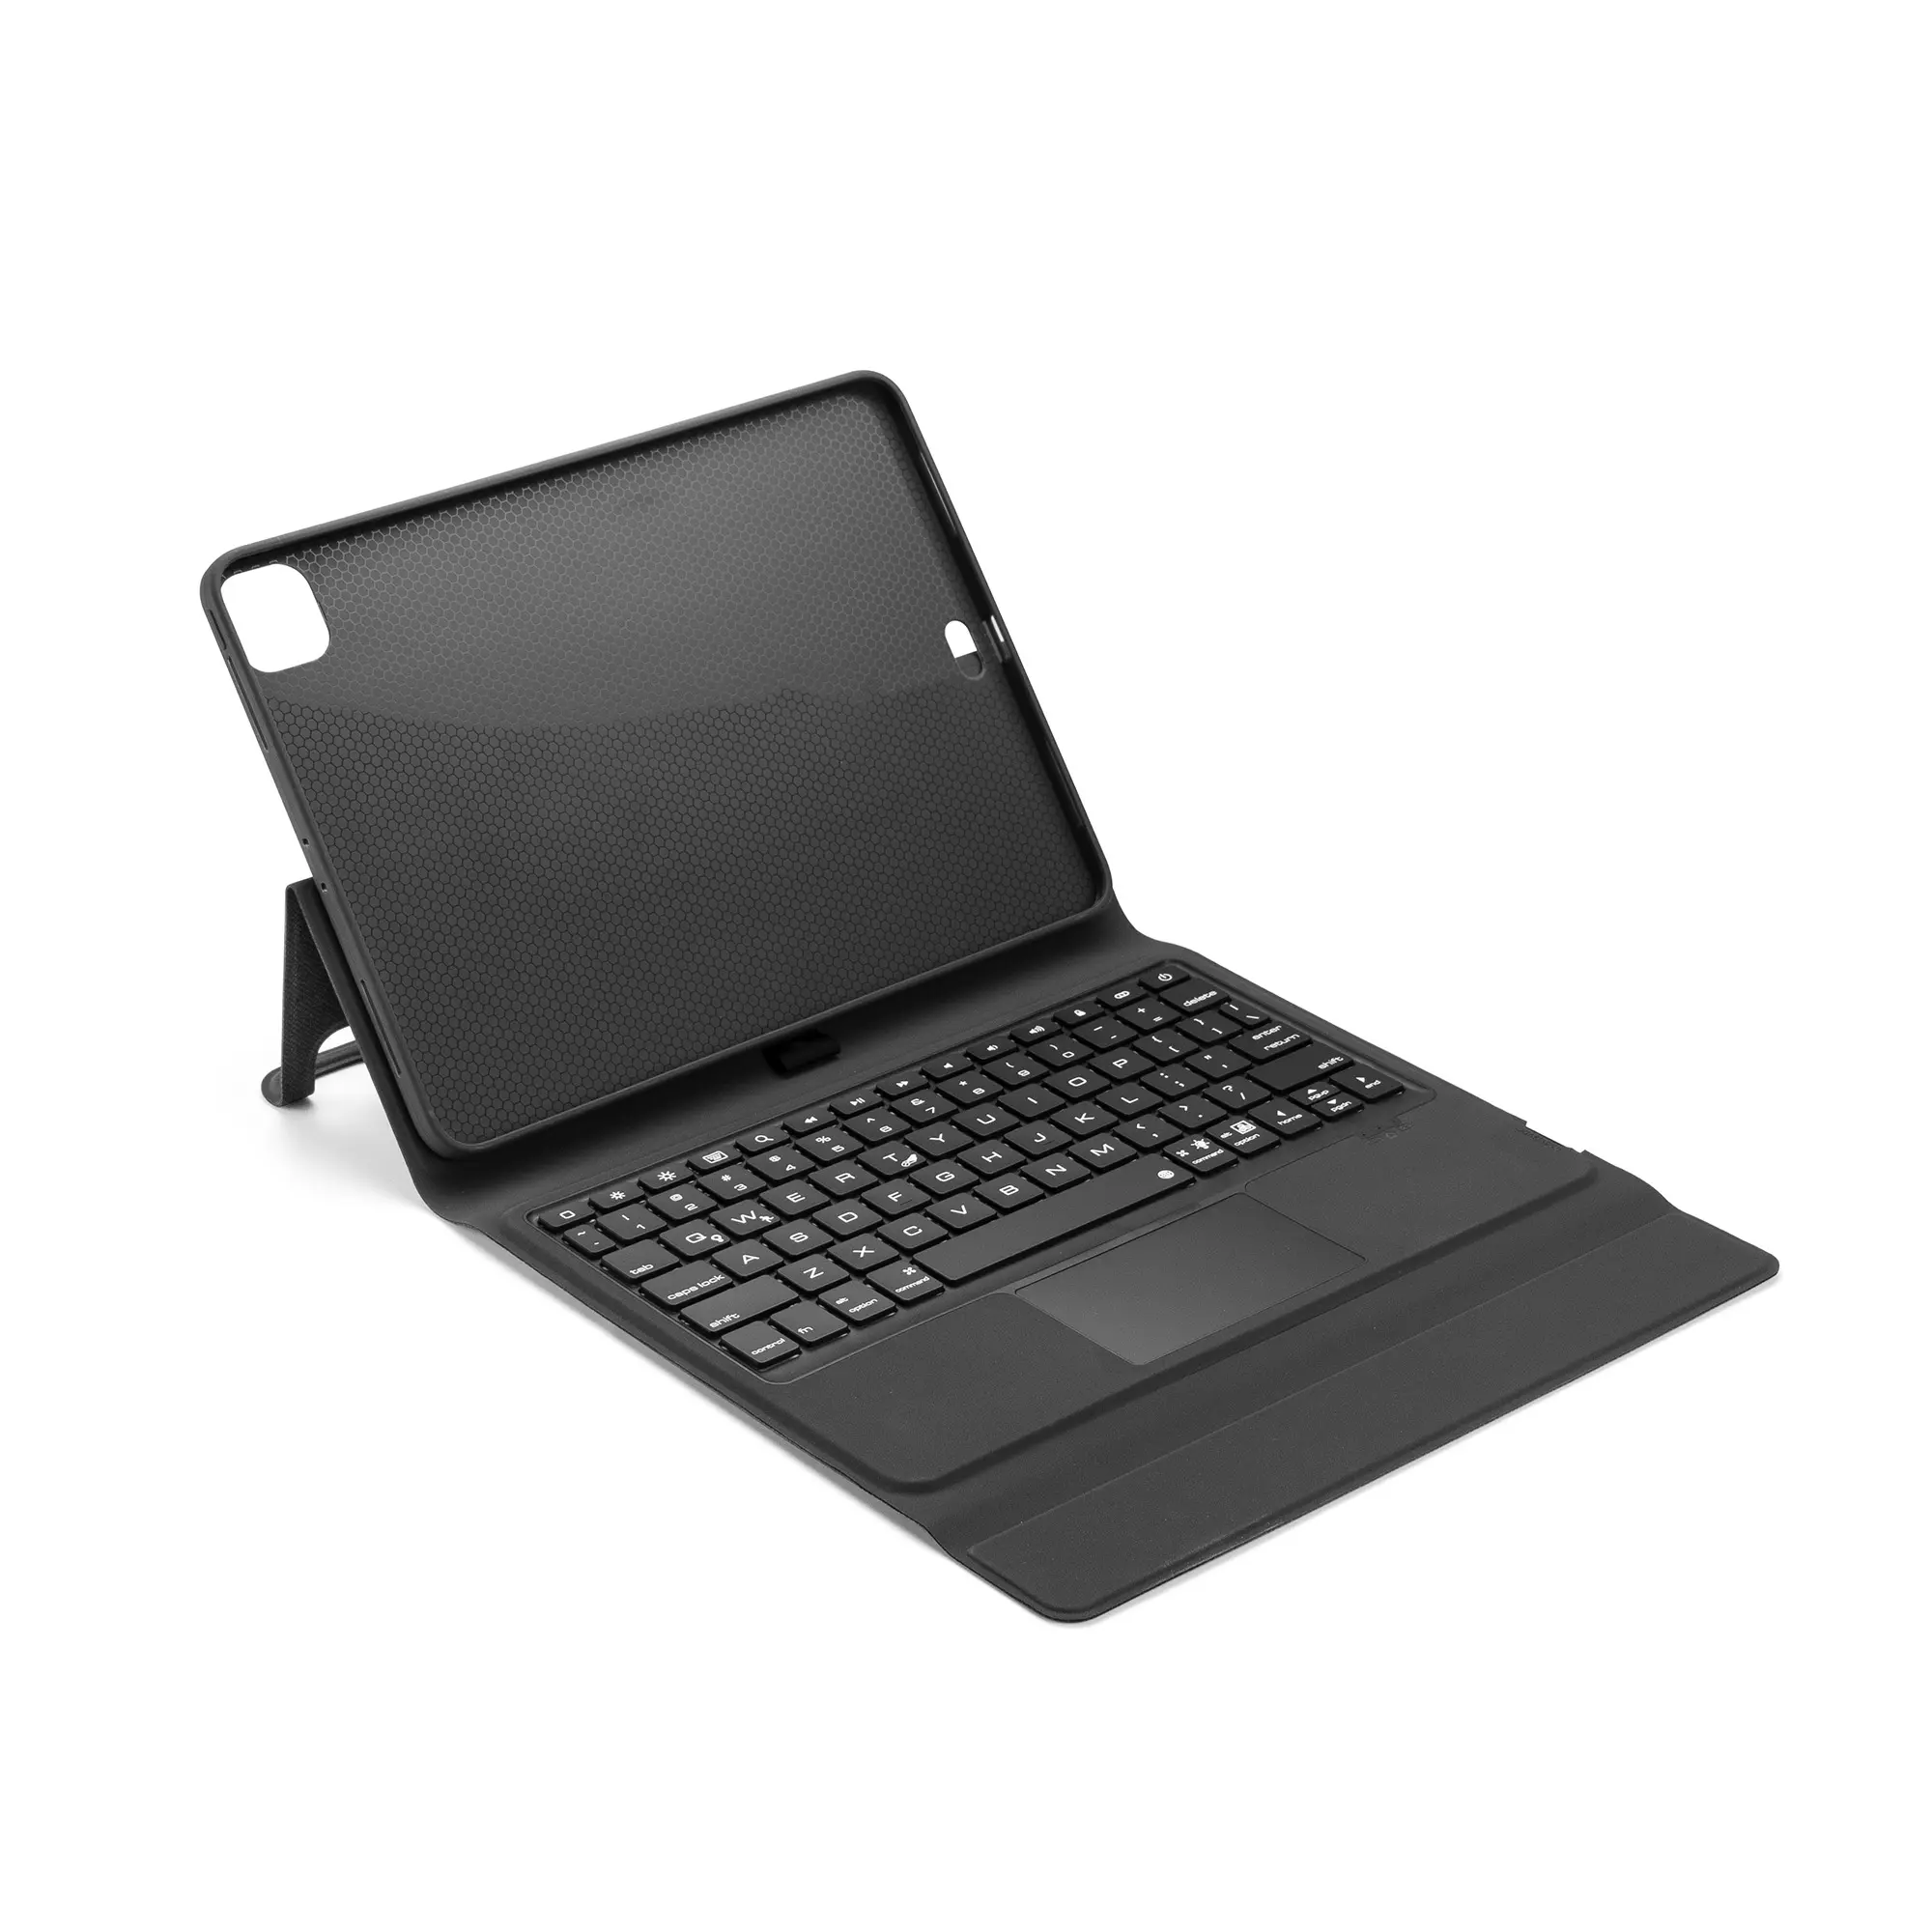 Estojo de proteção arco-íris teclado, capa dobrável pu com proteção escudo com teclado de toque para 2020 ipad 11